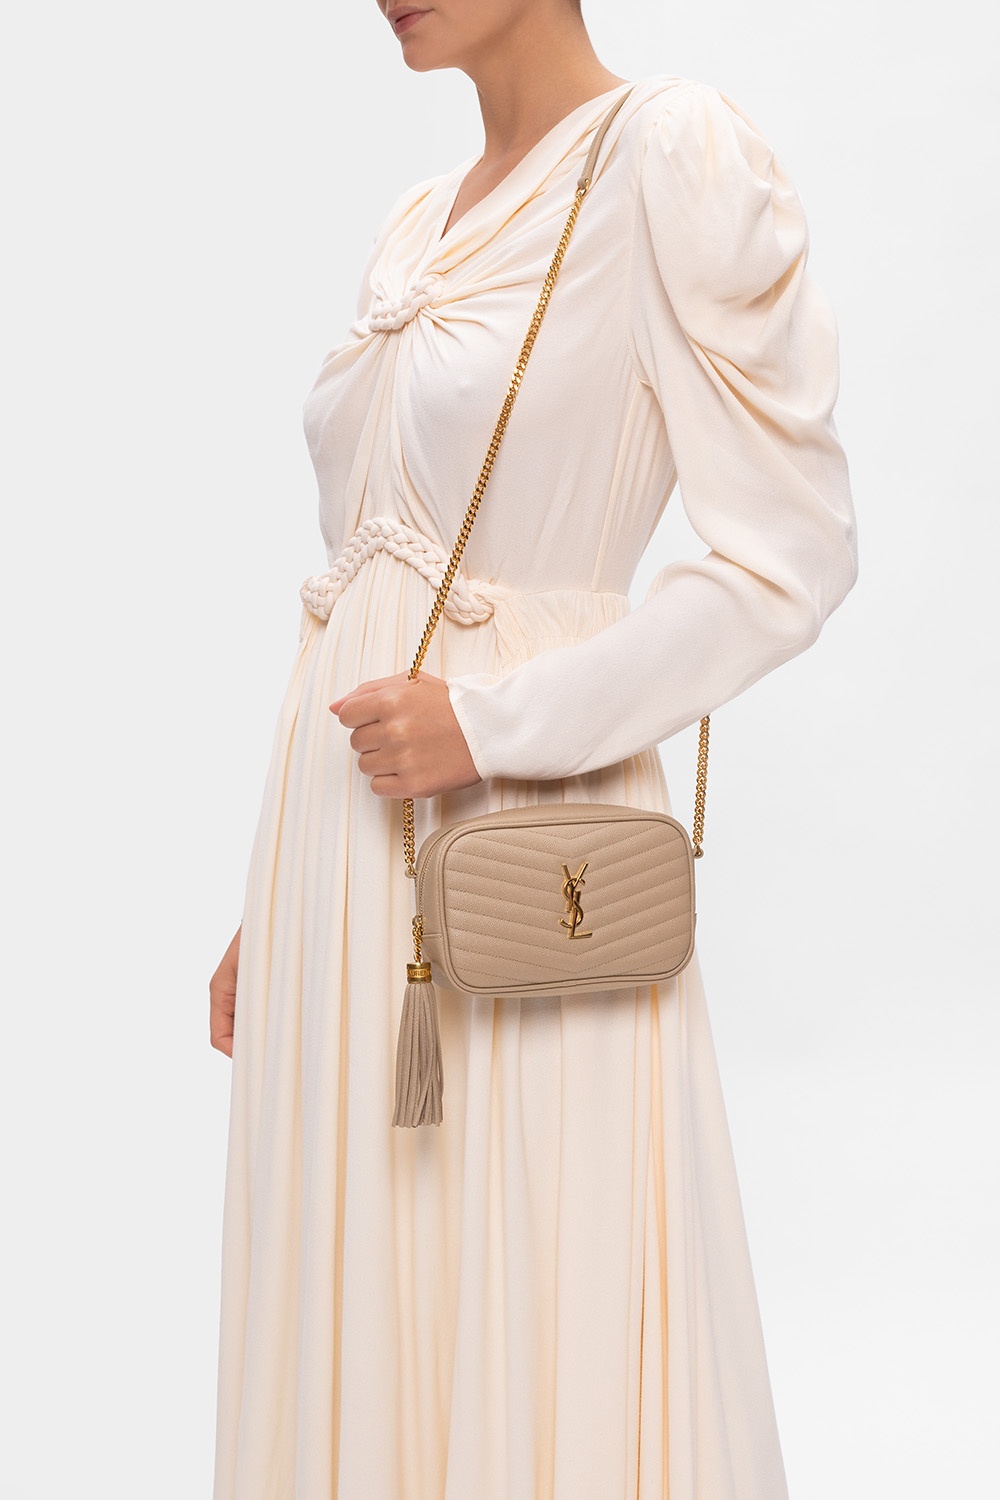 Saint Laurent Lou Mini Quilted Textured-leather Shoulder Bag - Off-white